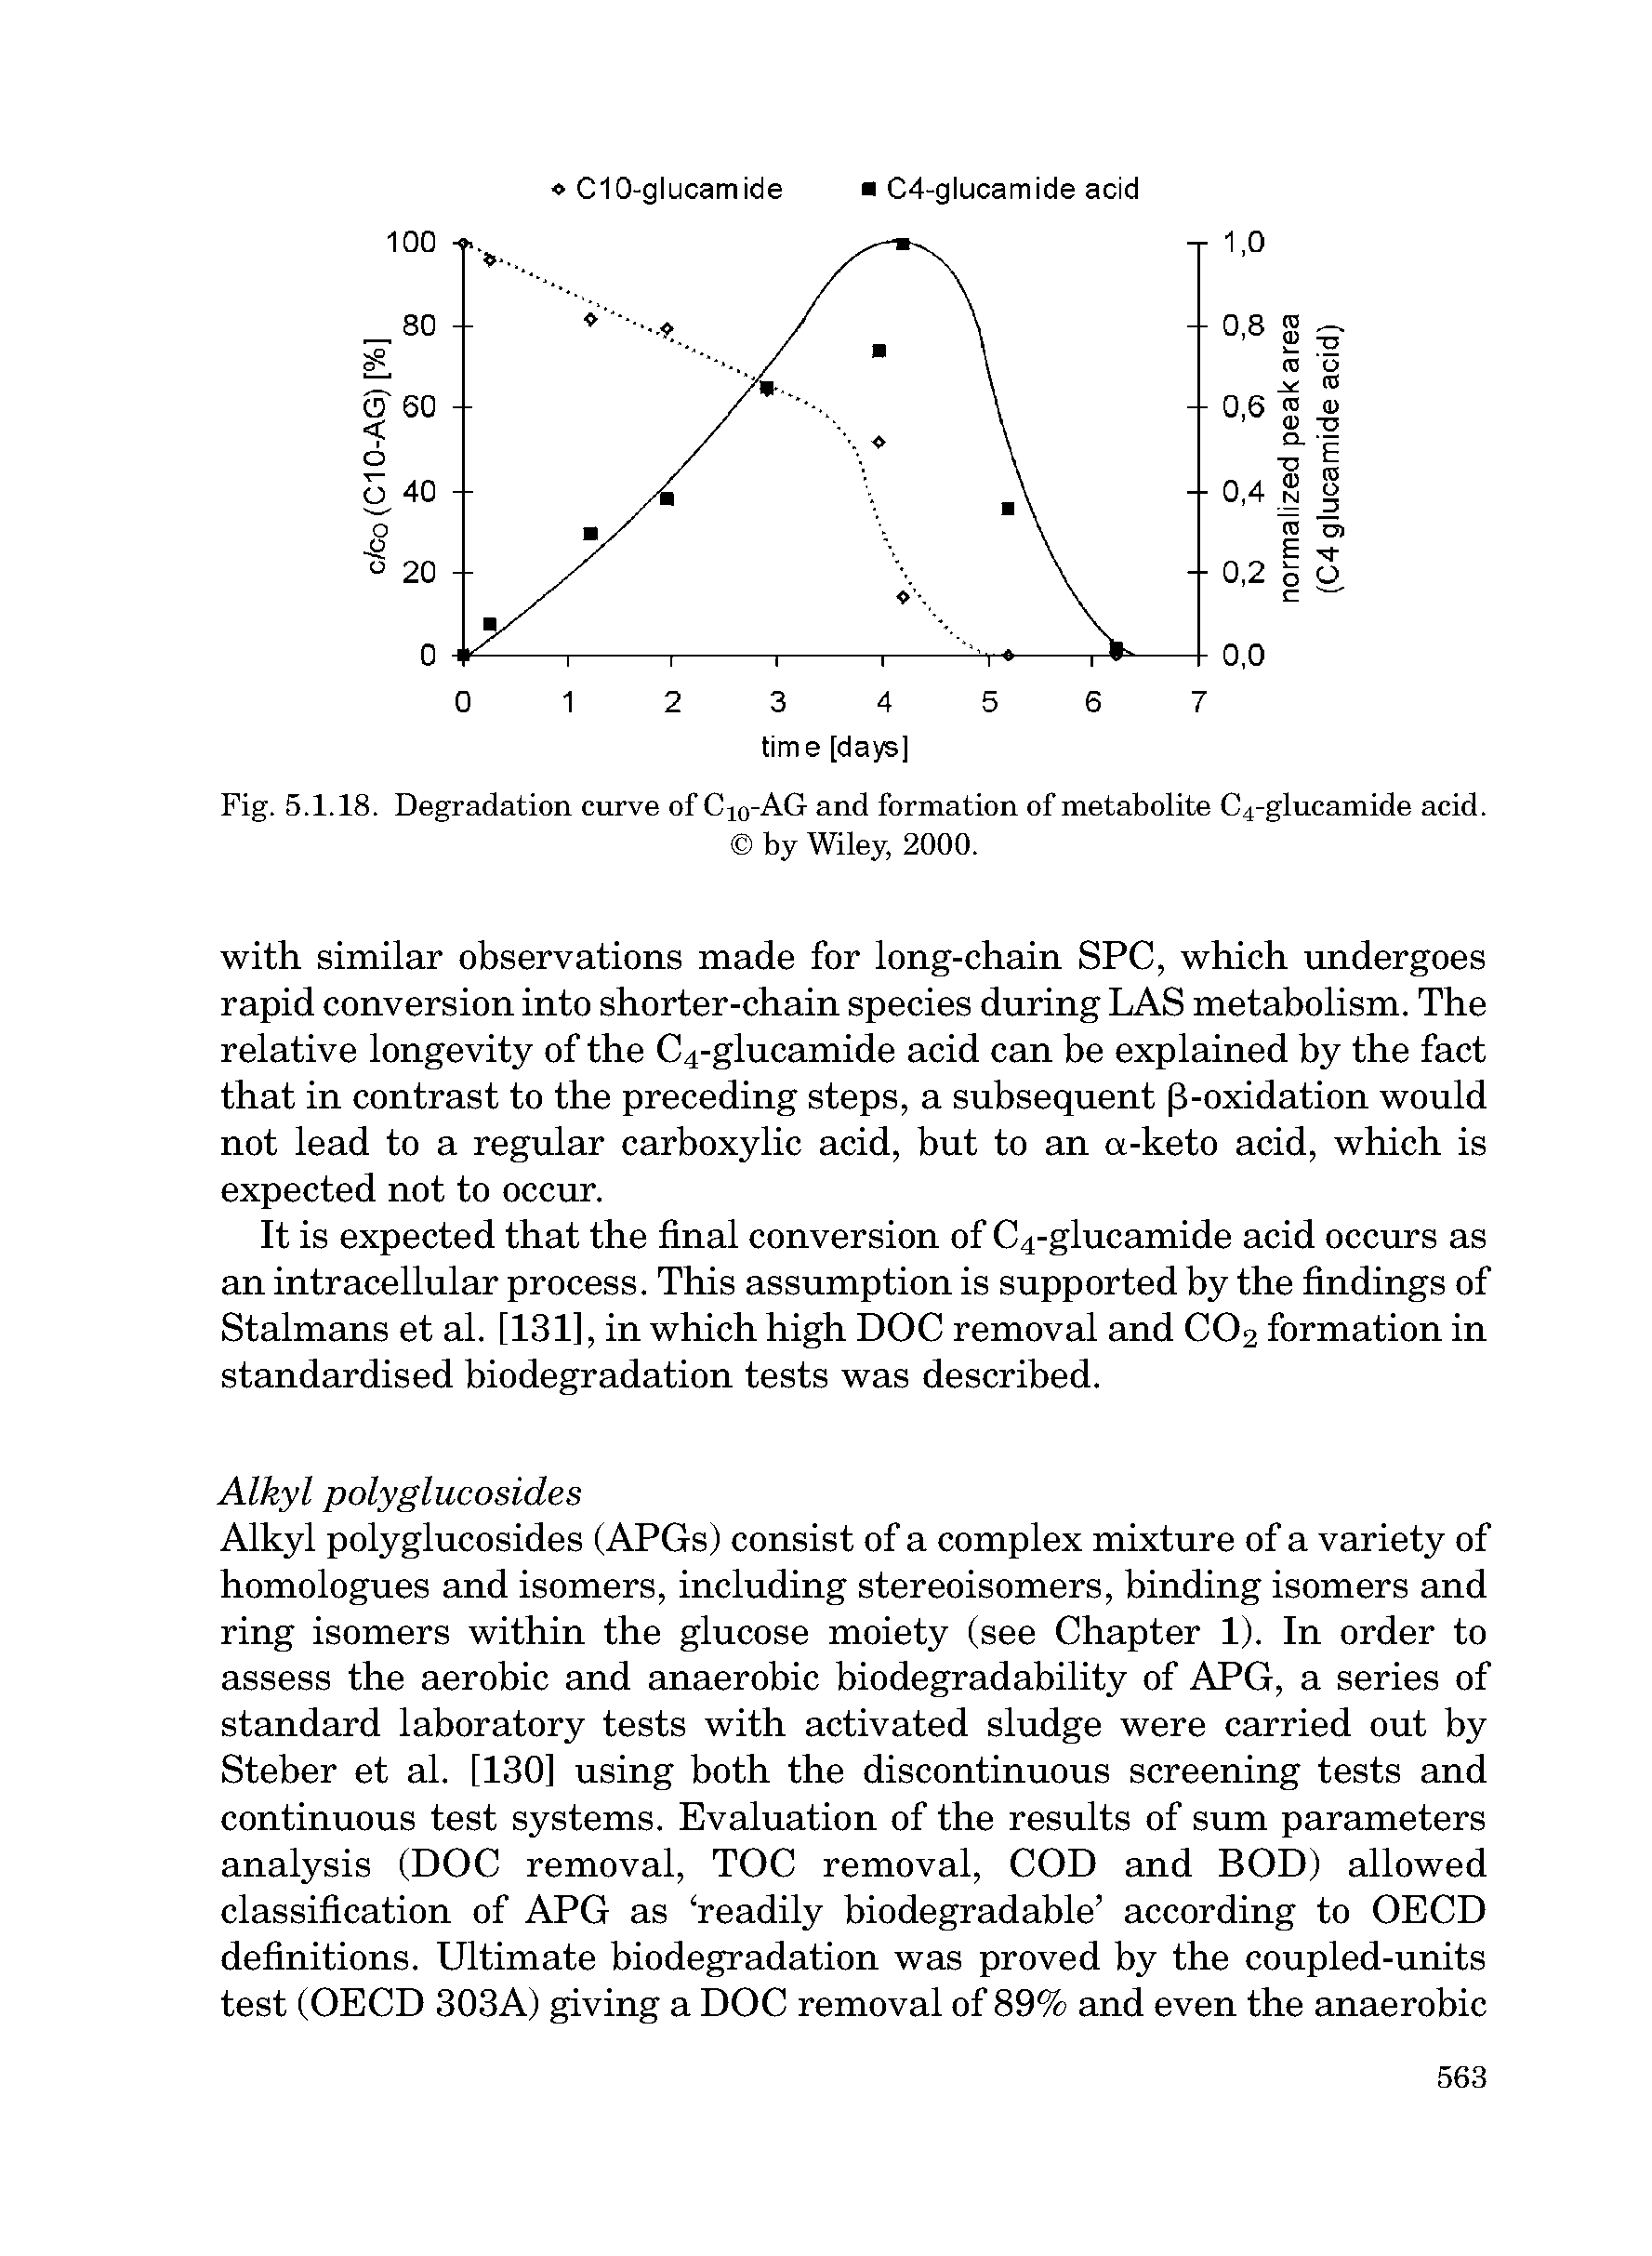 Fig. 5.1.18. Degradation curve of C10-AG and formation of metabolite C4-glucamide acid.